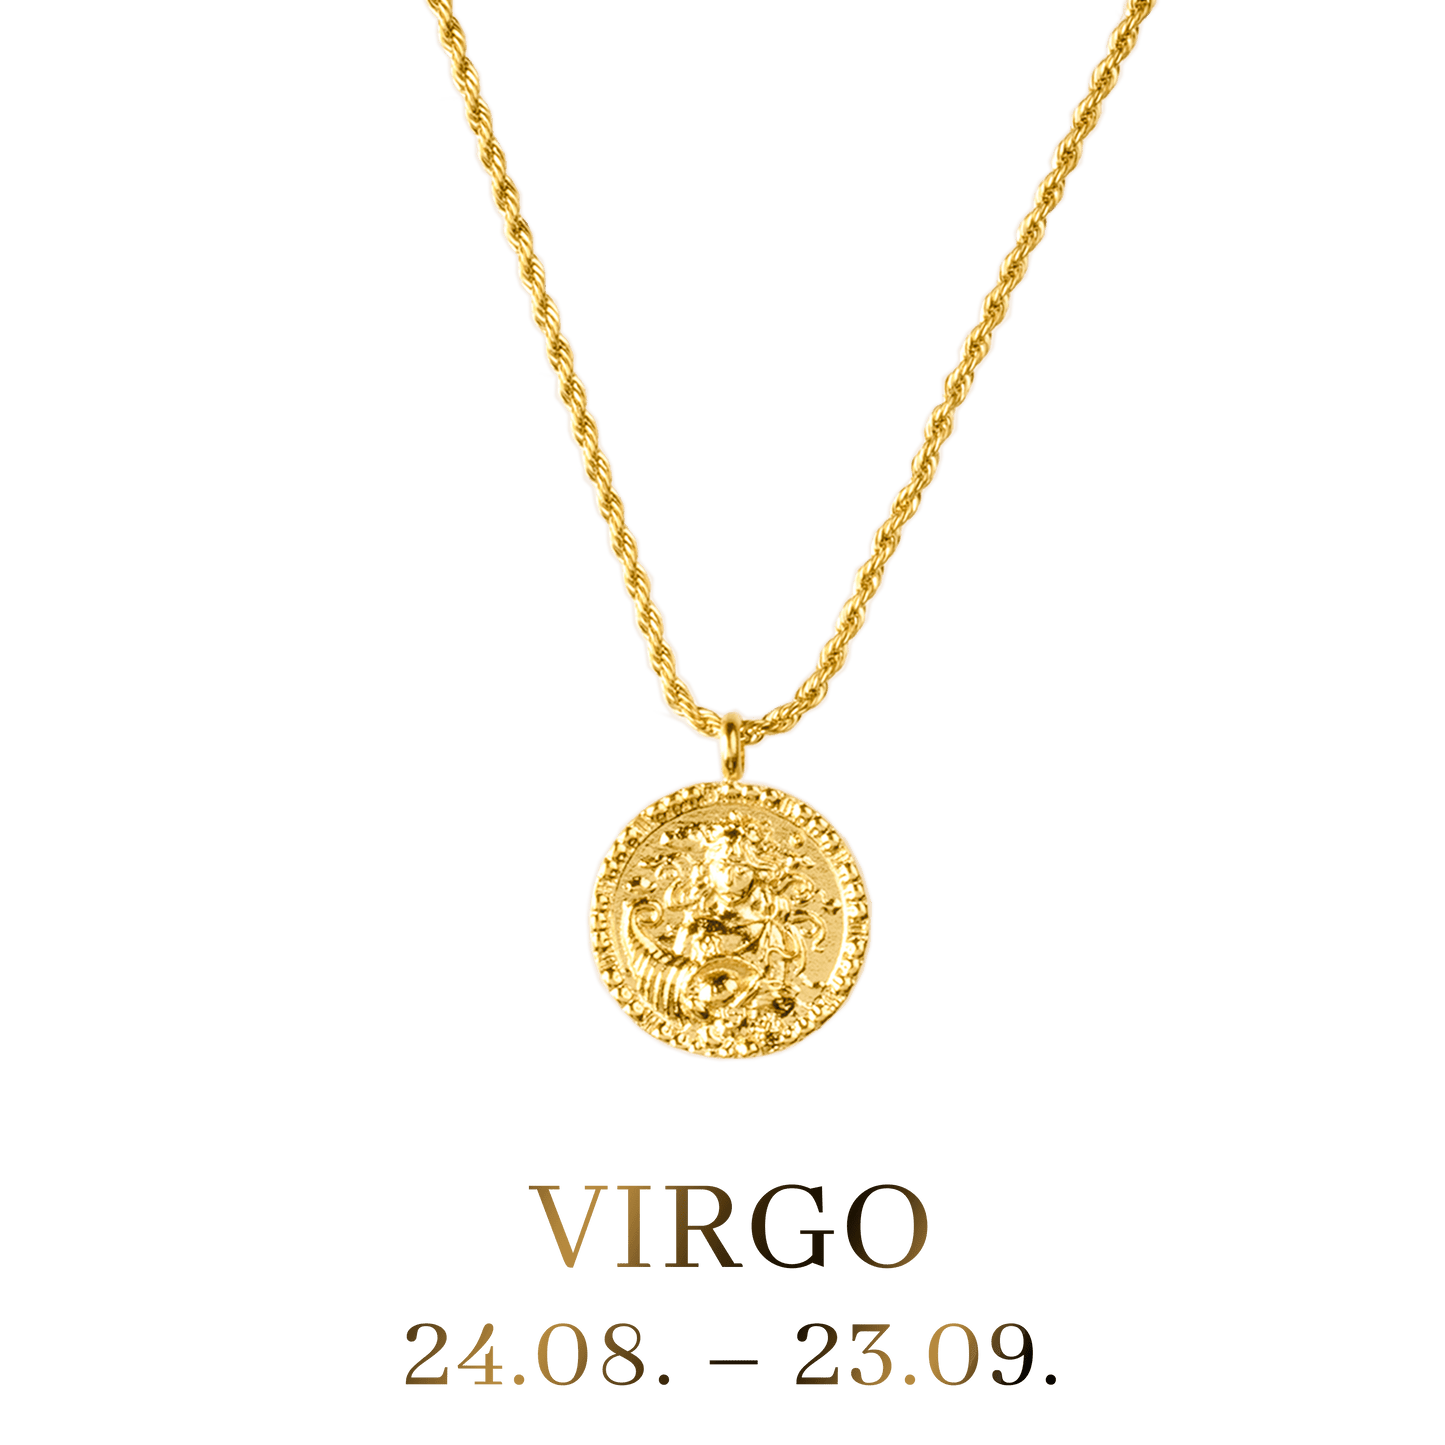 Virgo Necklace Gold